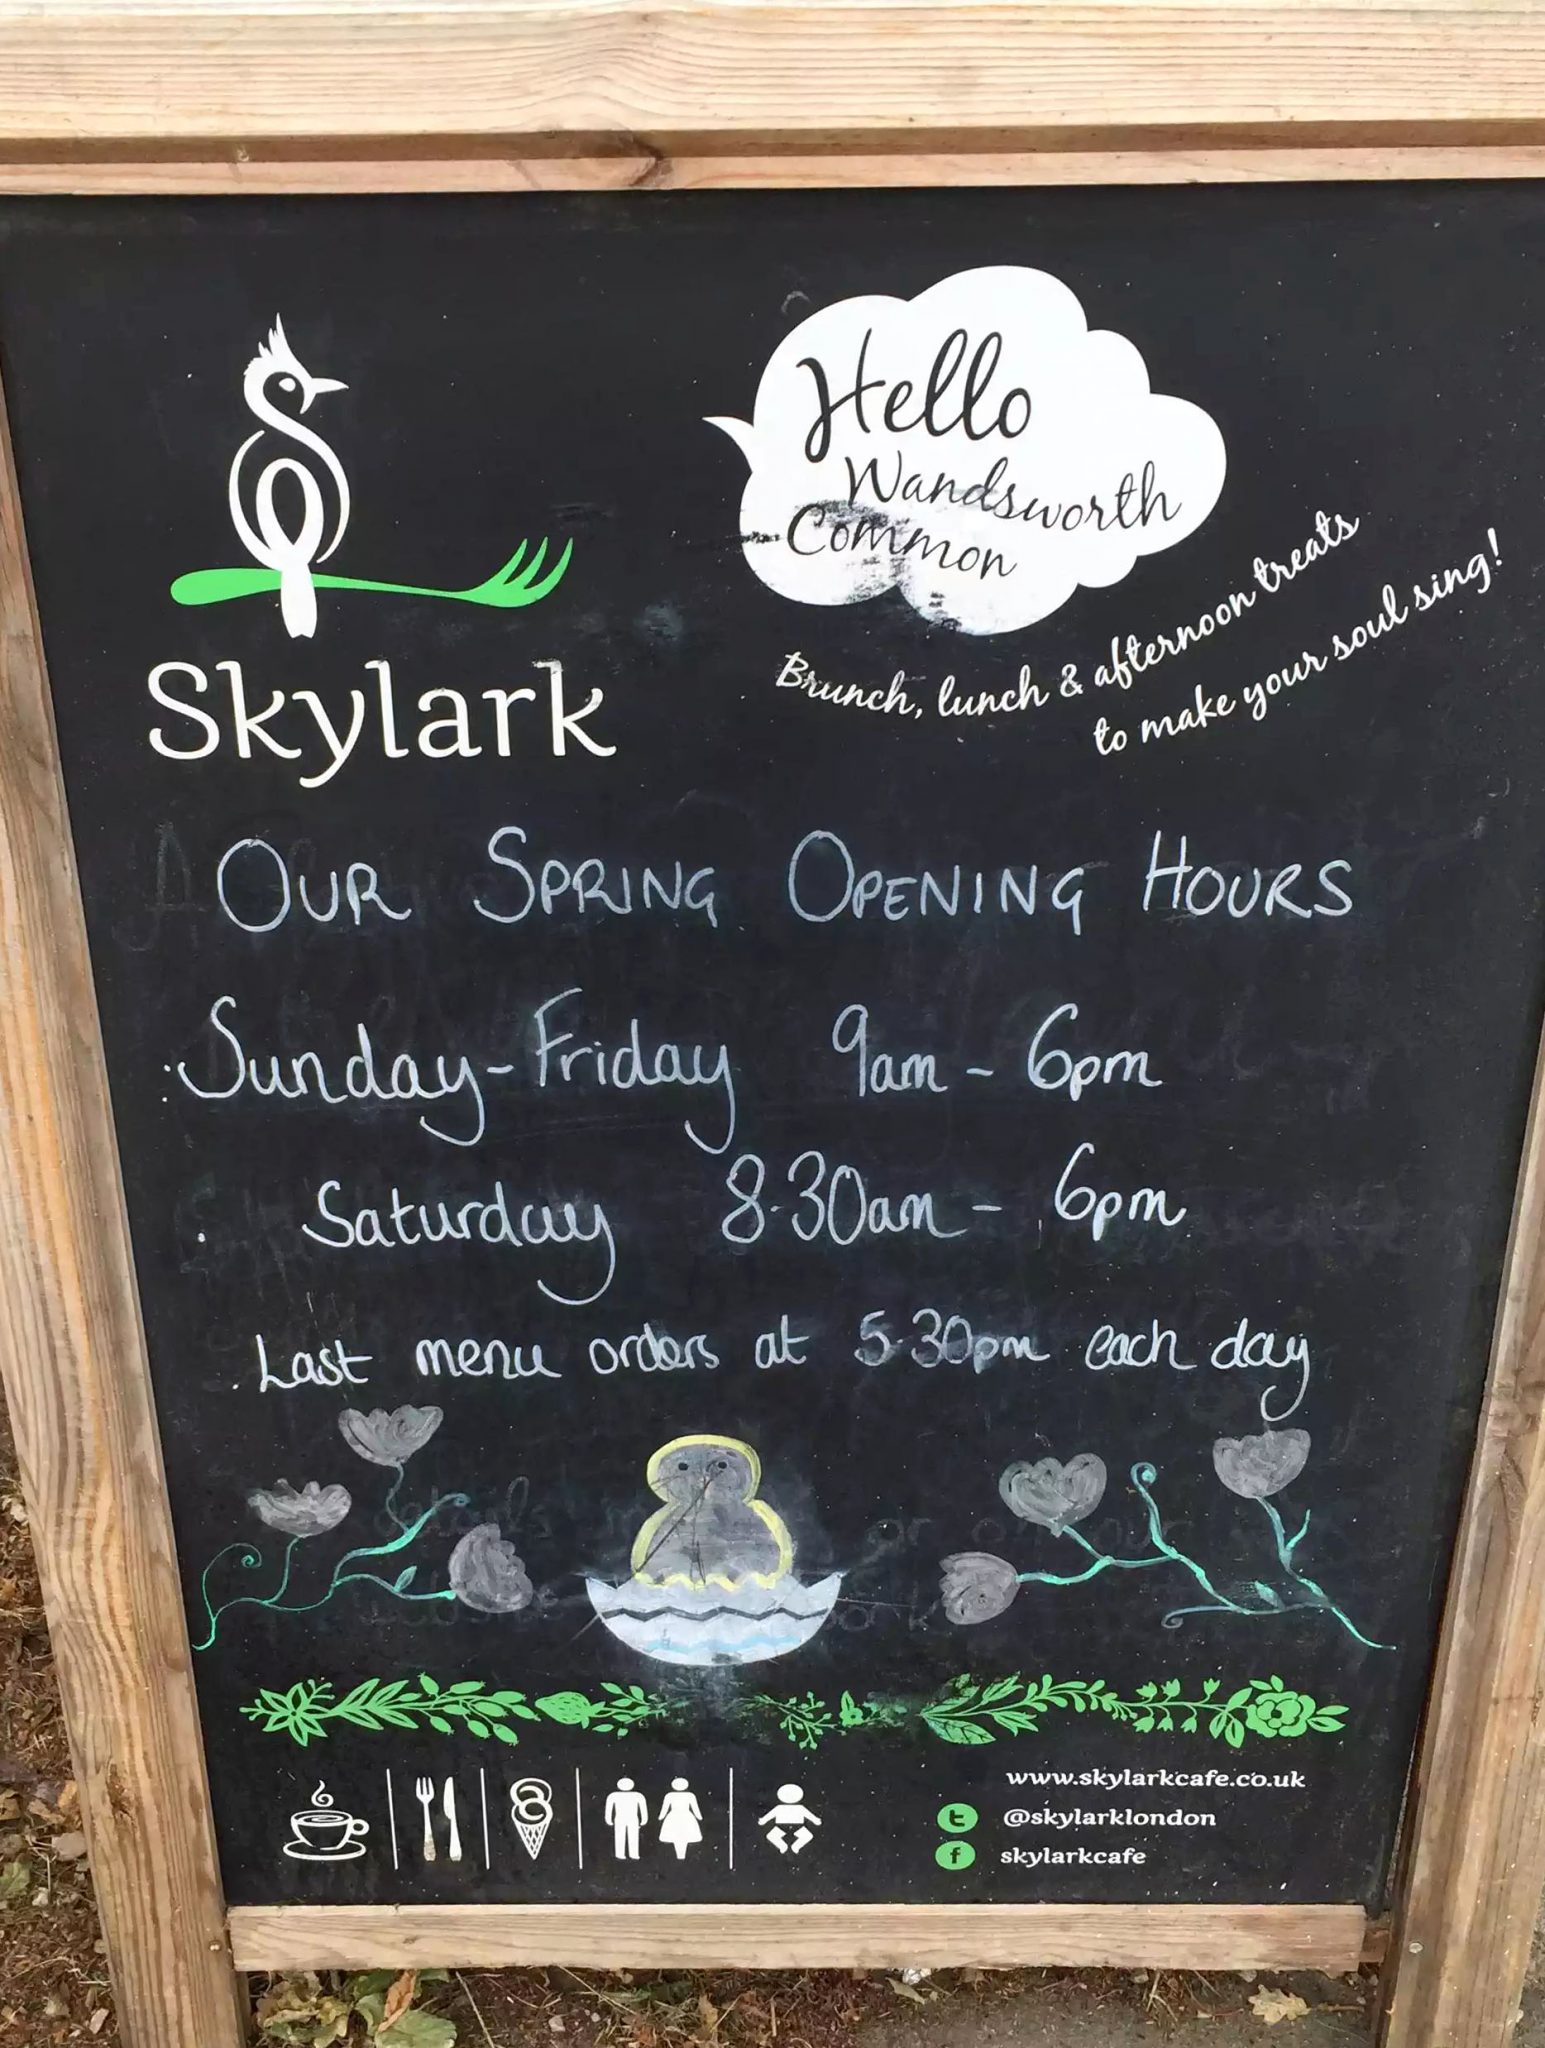 Skylark Cafe Restaurant Wandsworth Common Lunch Drinks Opening Hours